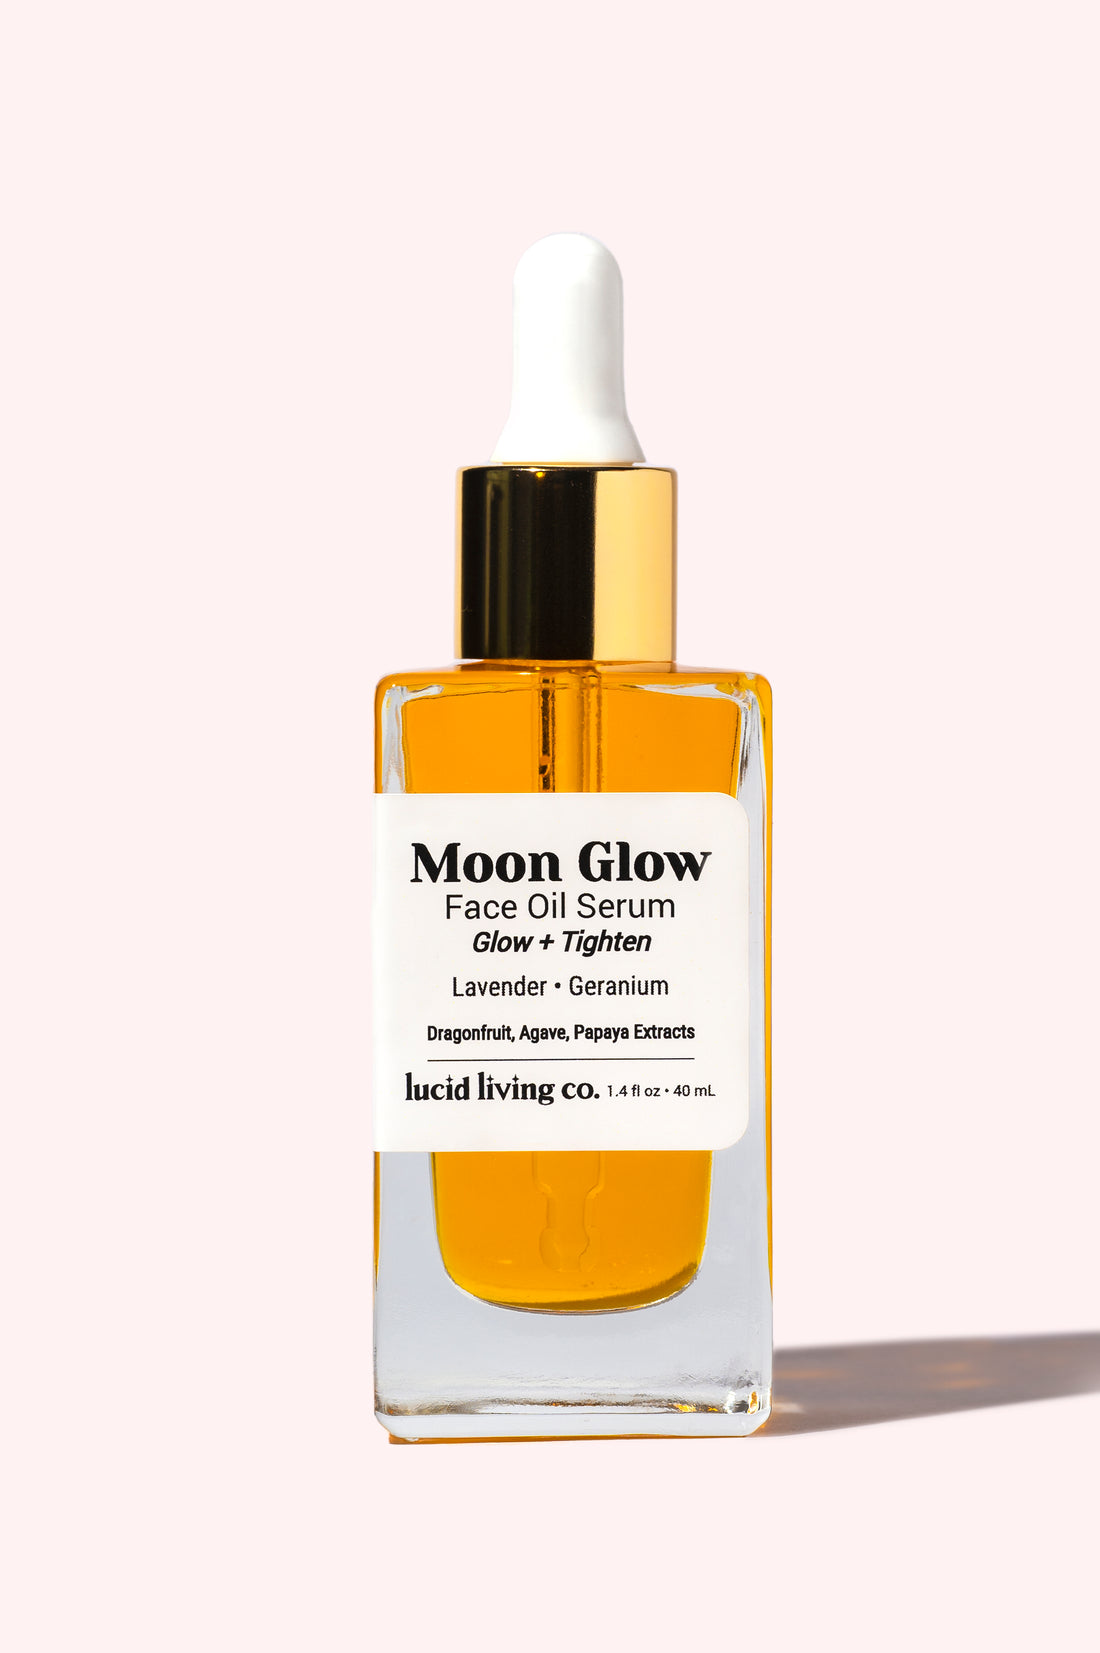 Moon Glow Face Oil Serum